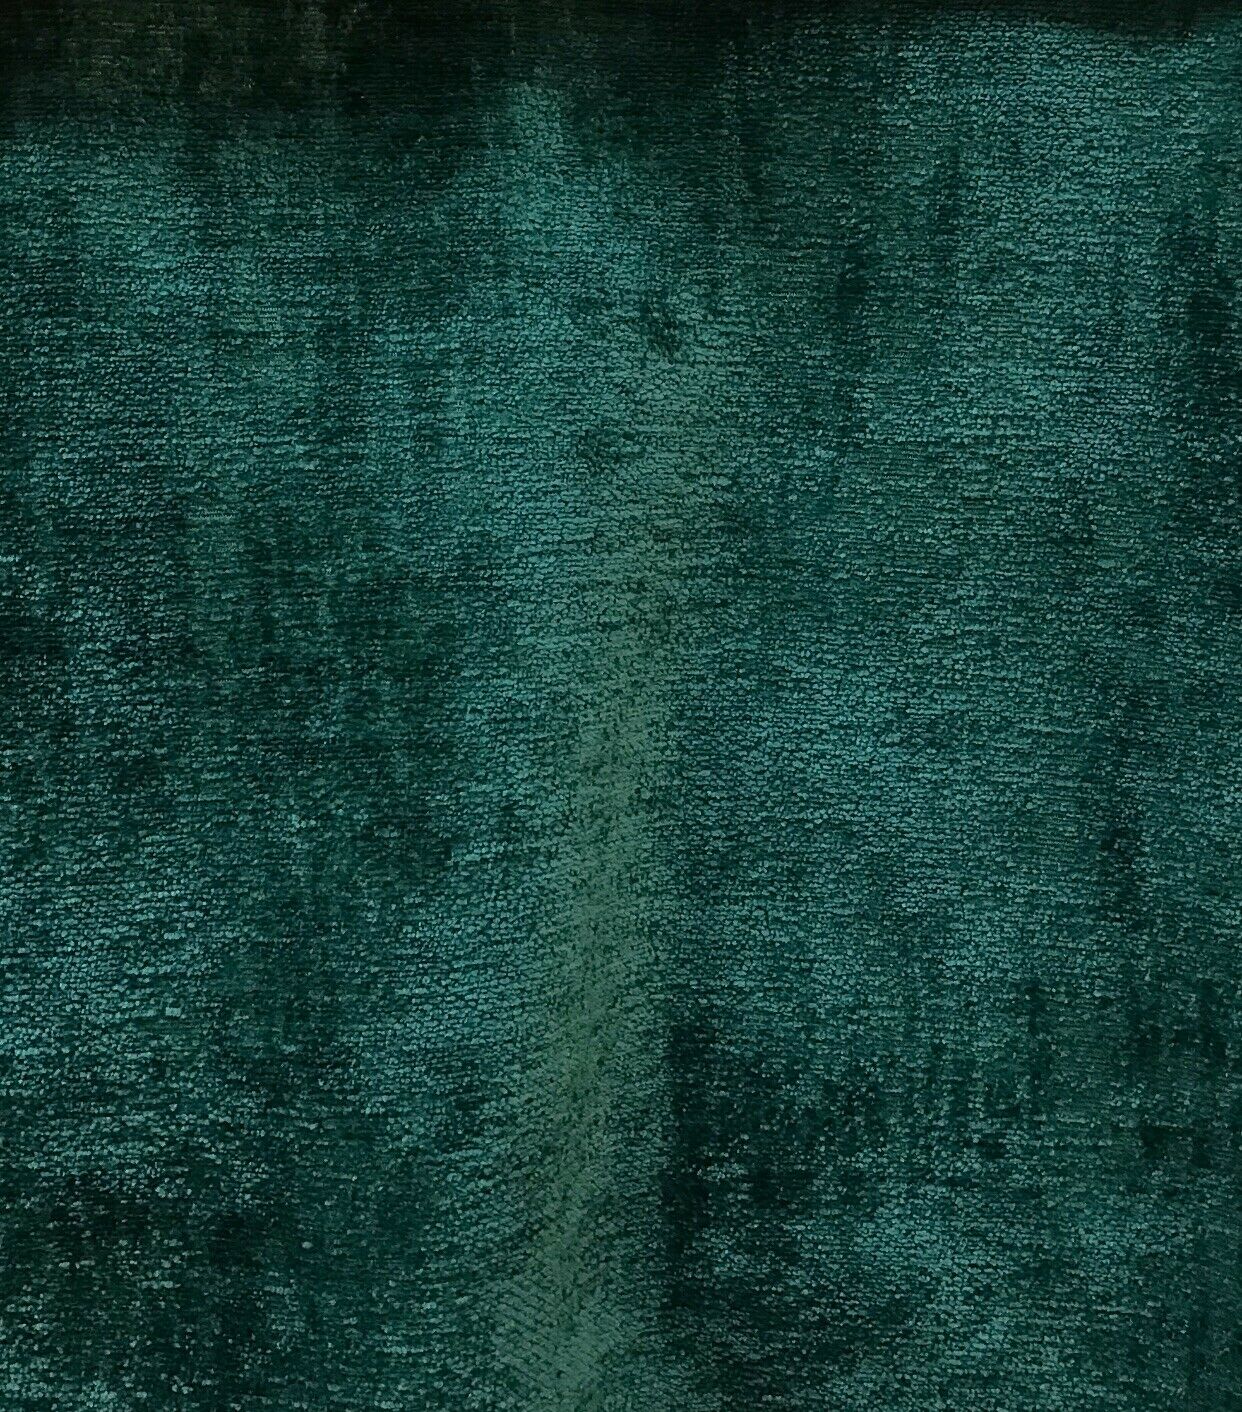 Green Velvet Fabric Texture - Image to u